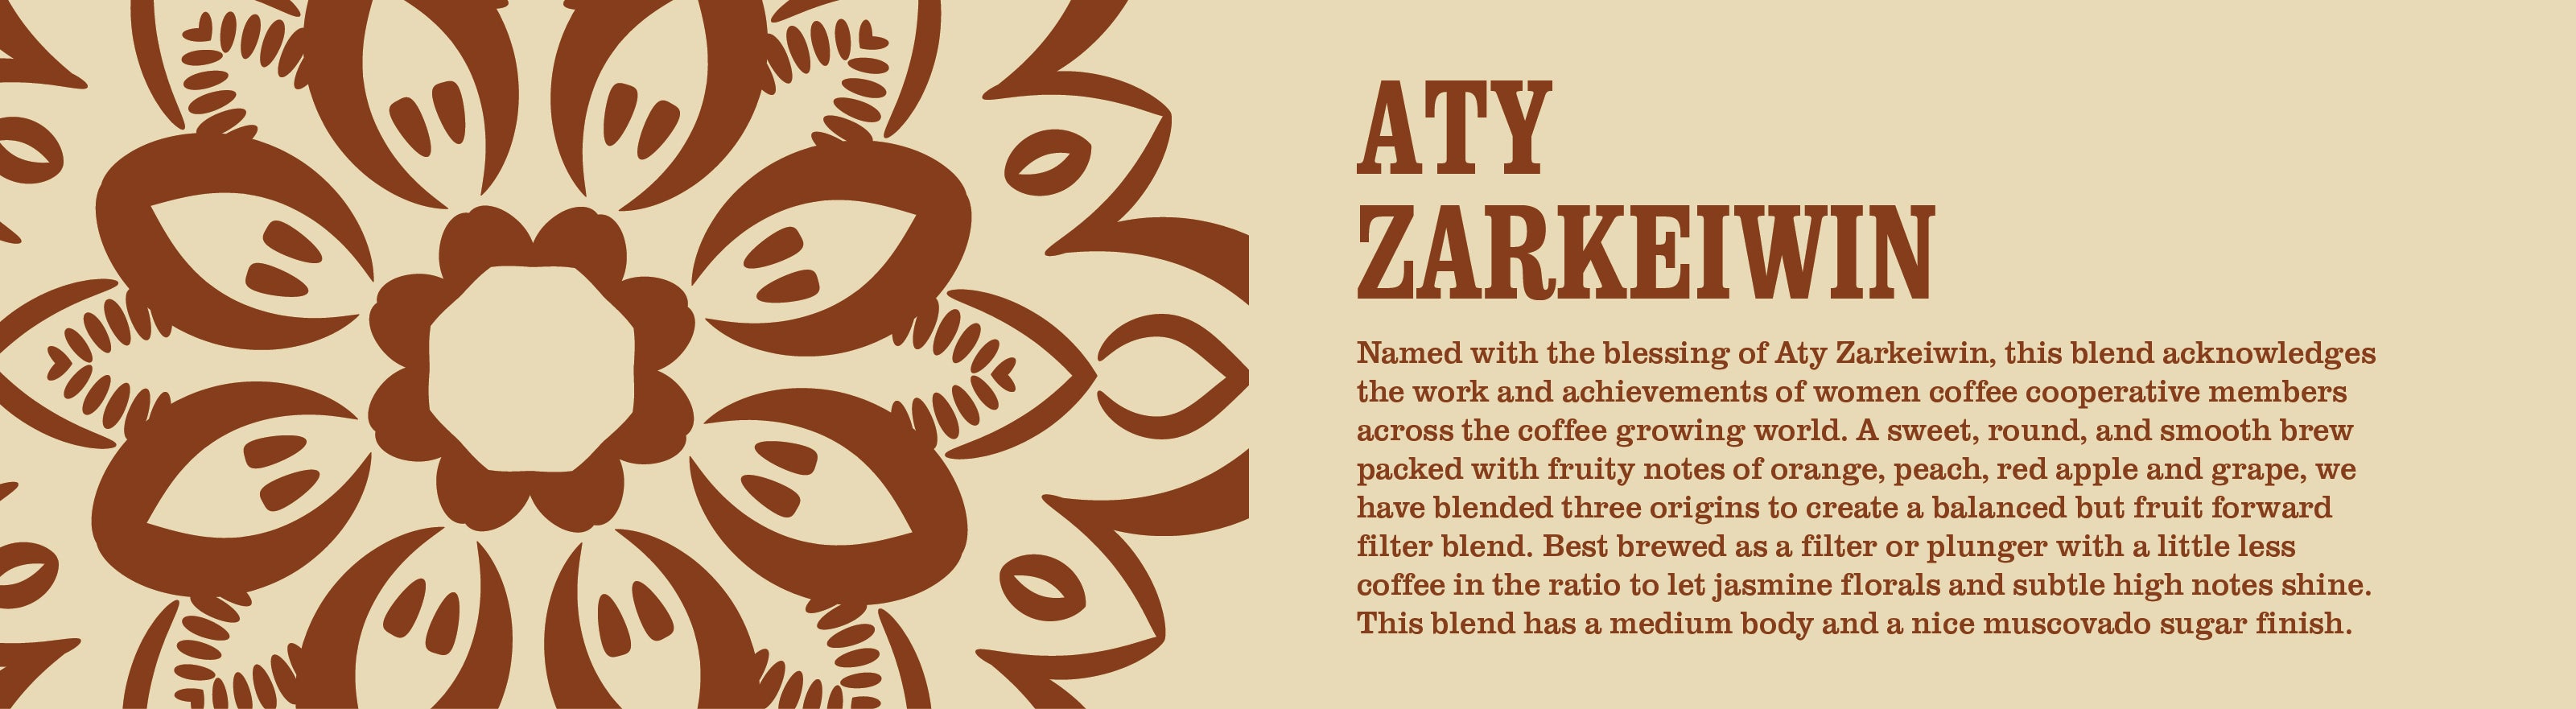 aty coffee informational image